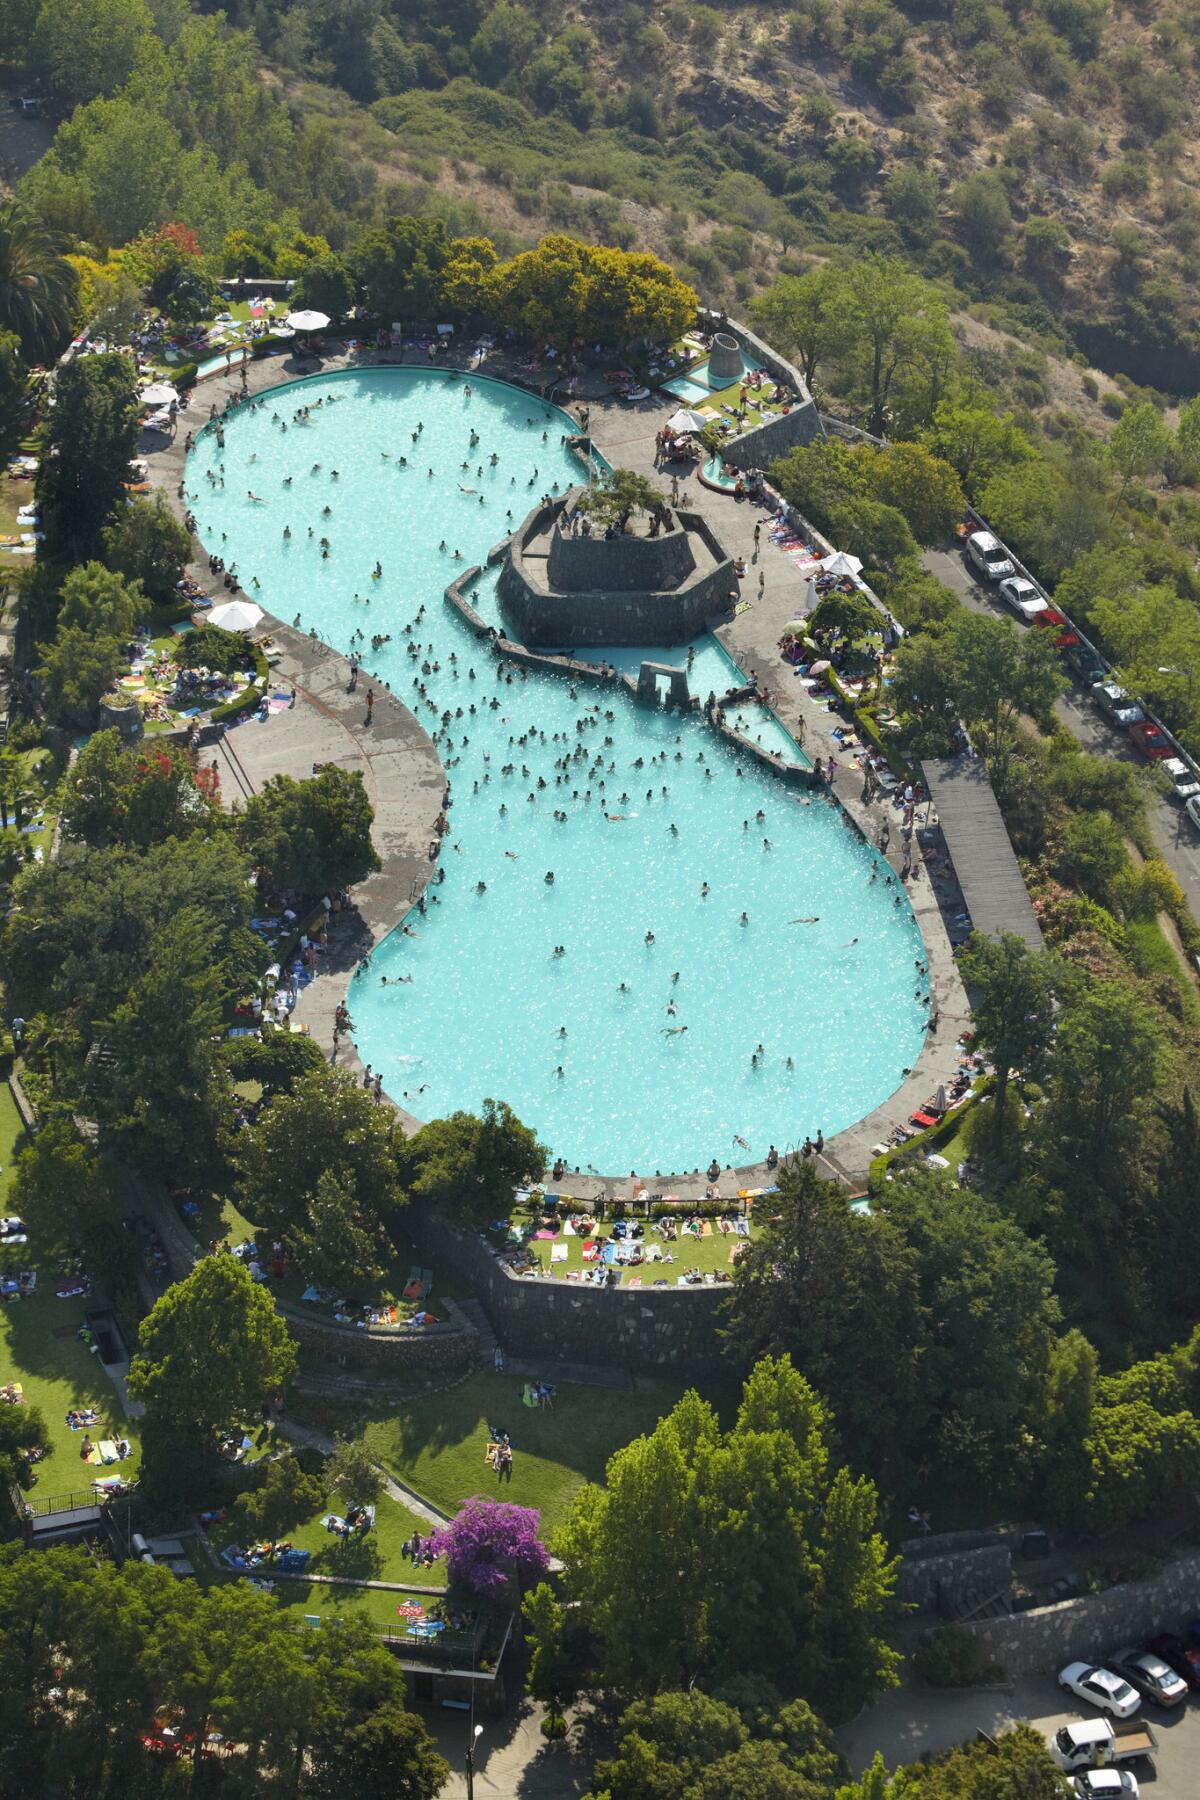 Aerial of Piscina Antilen (Antilen Swimming Pool), Parque Metropolitano, on top of Cerro San Cristobal.